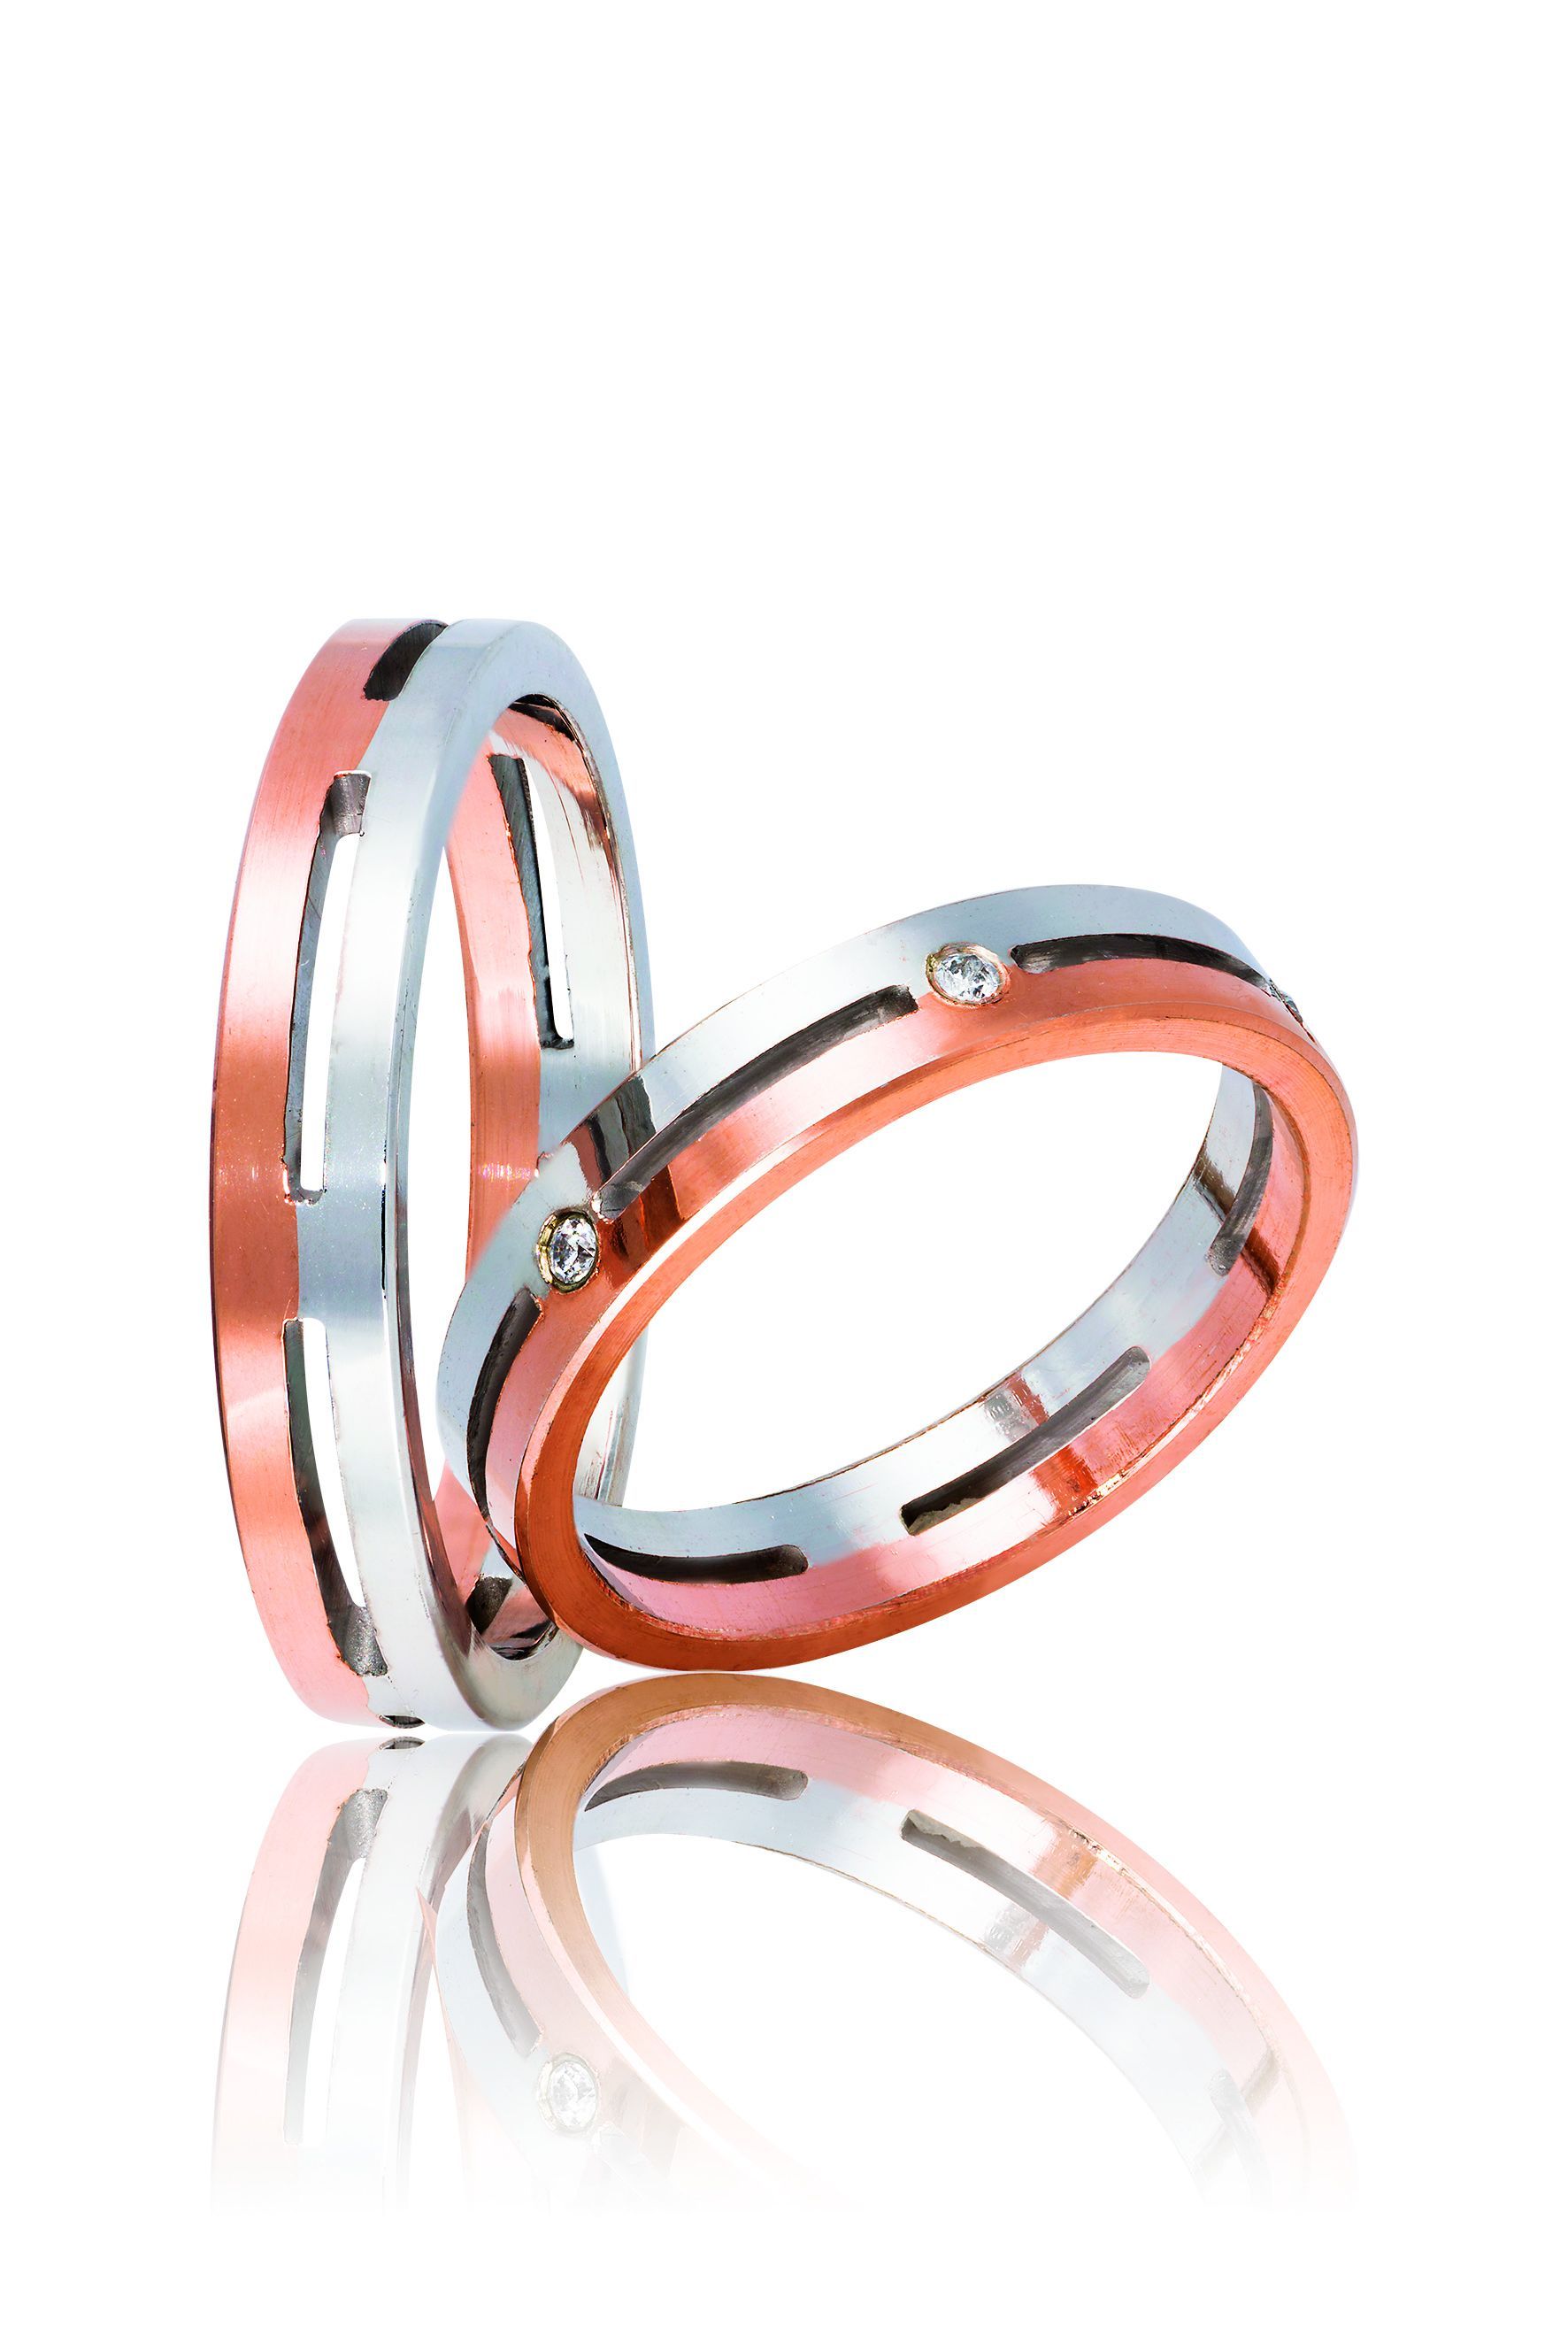 White gold & rose gold wedding rings 4mm (code 5wr)